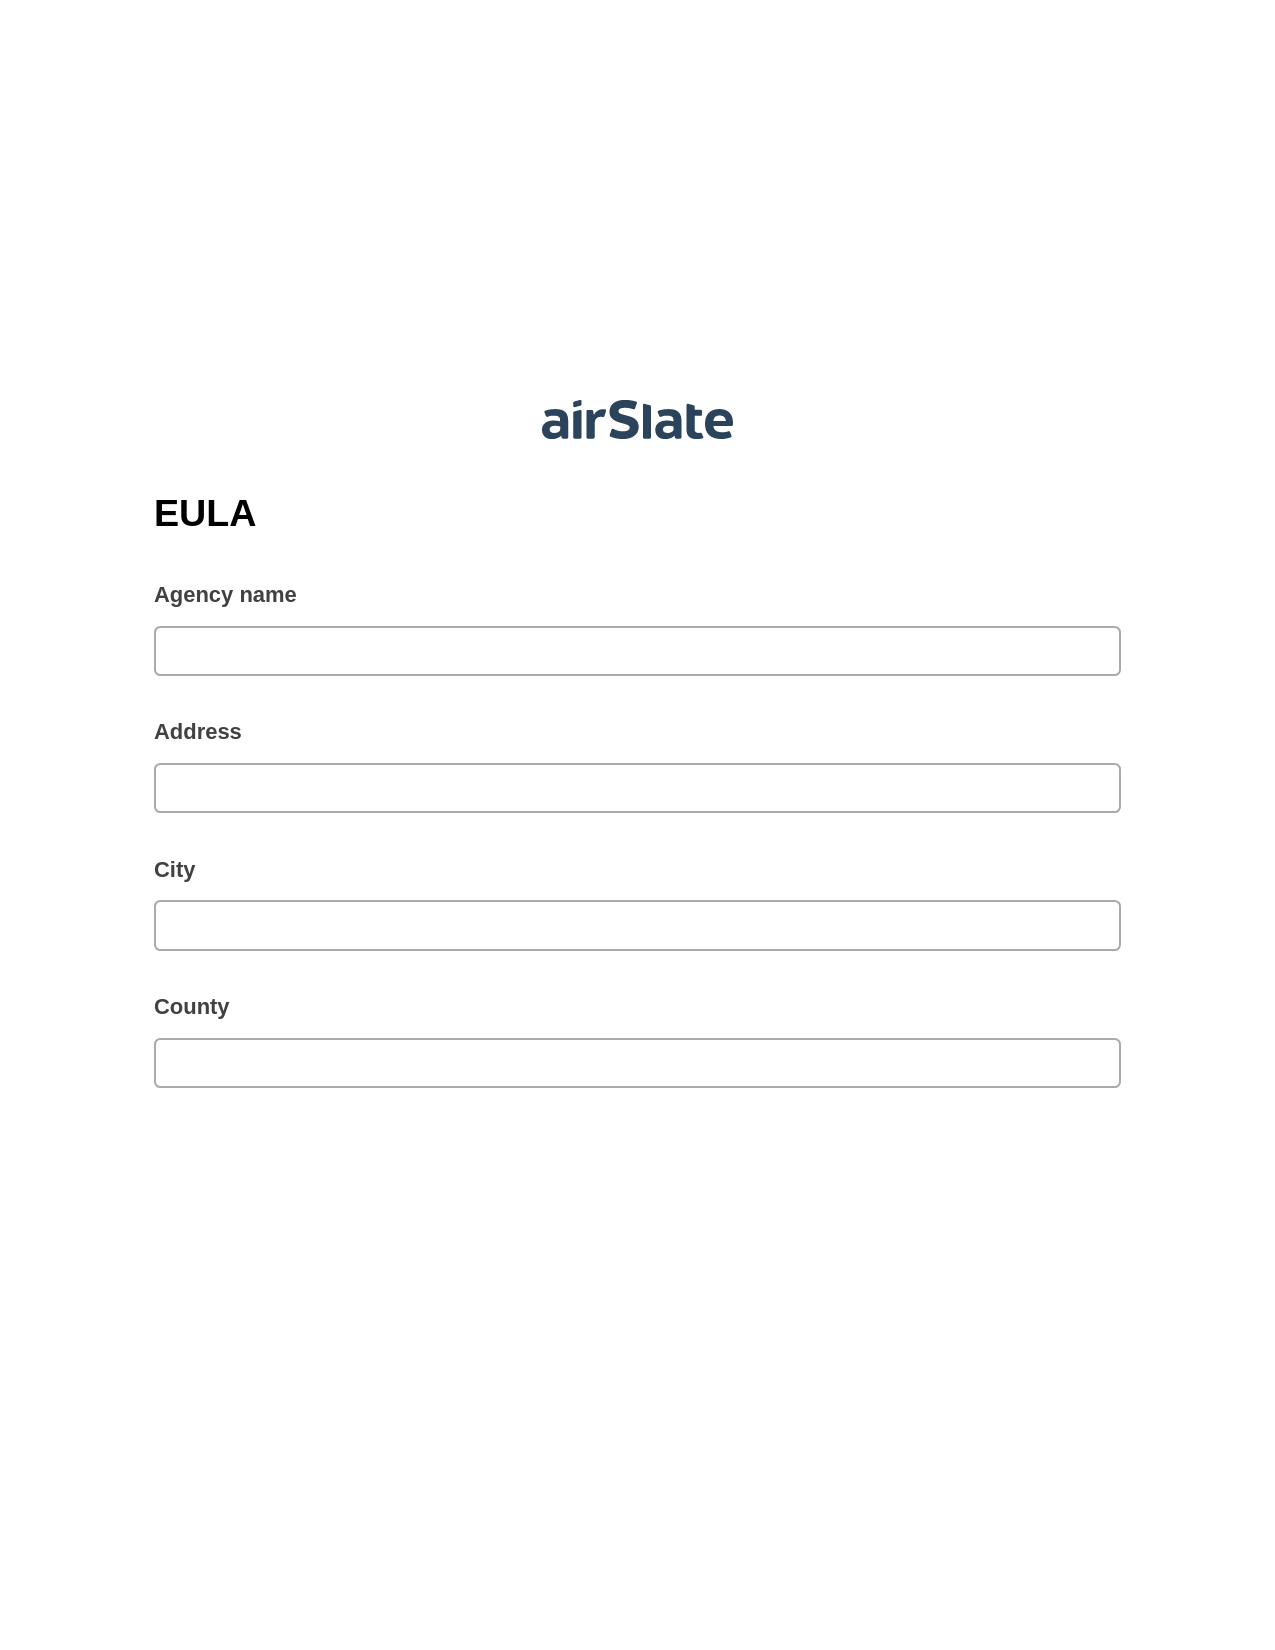 EULA Pre-fill from Salesforce Record Bot, Revoke Access Bot, Dropbox Bot